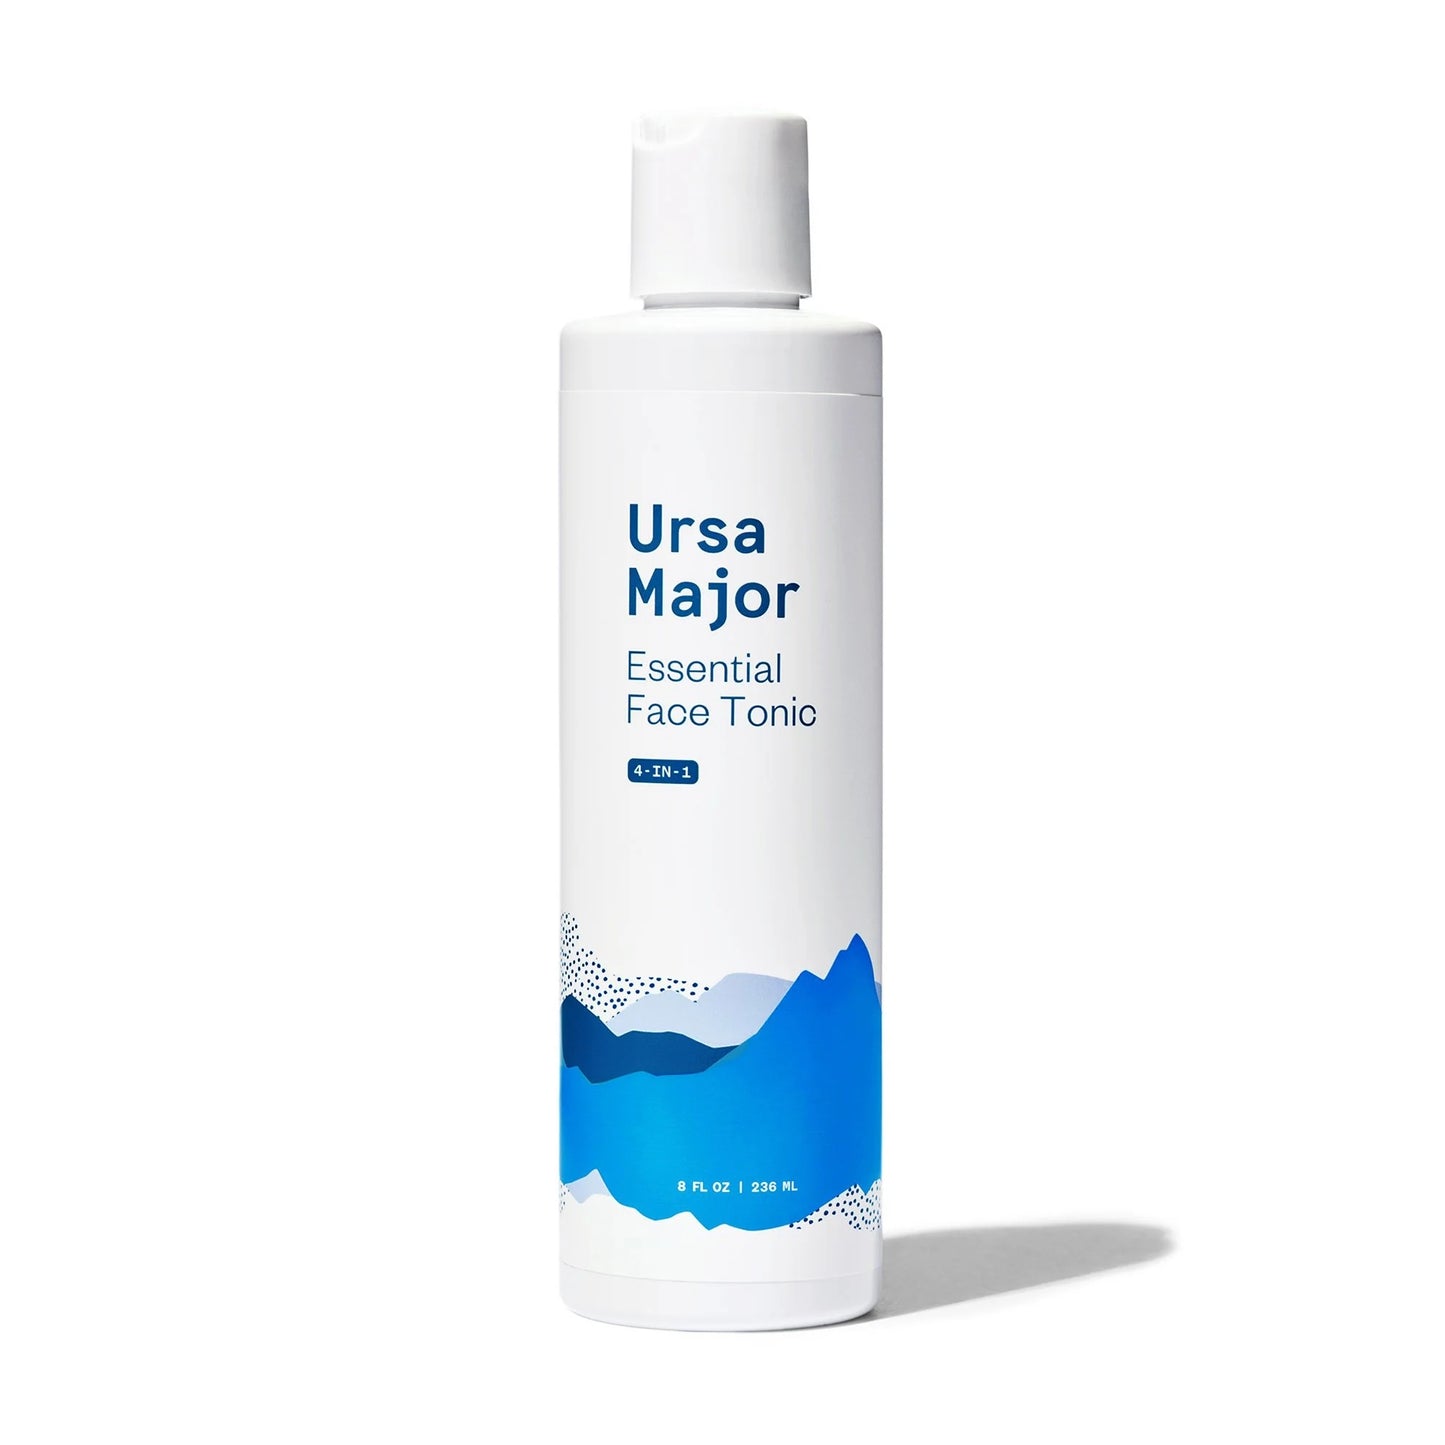 URSA MAJOR 4-in-1 Essential Face Tonic full size